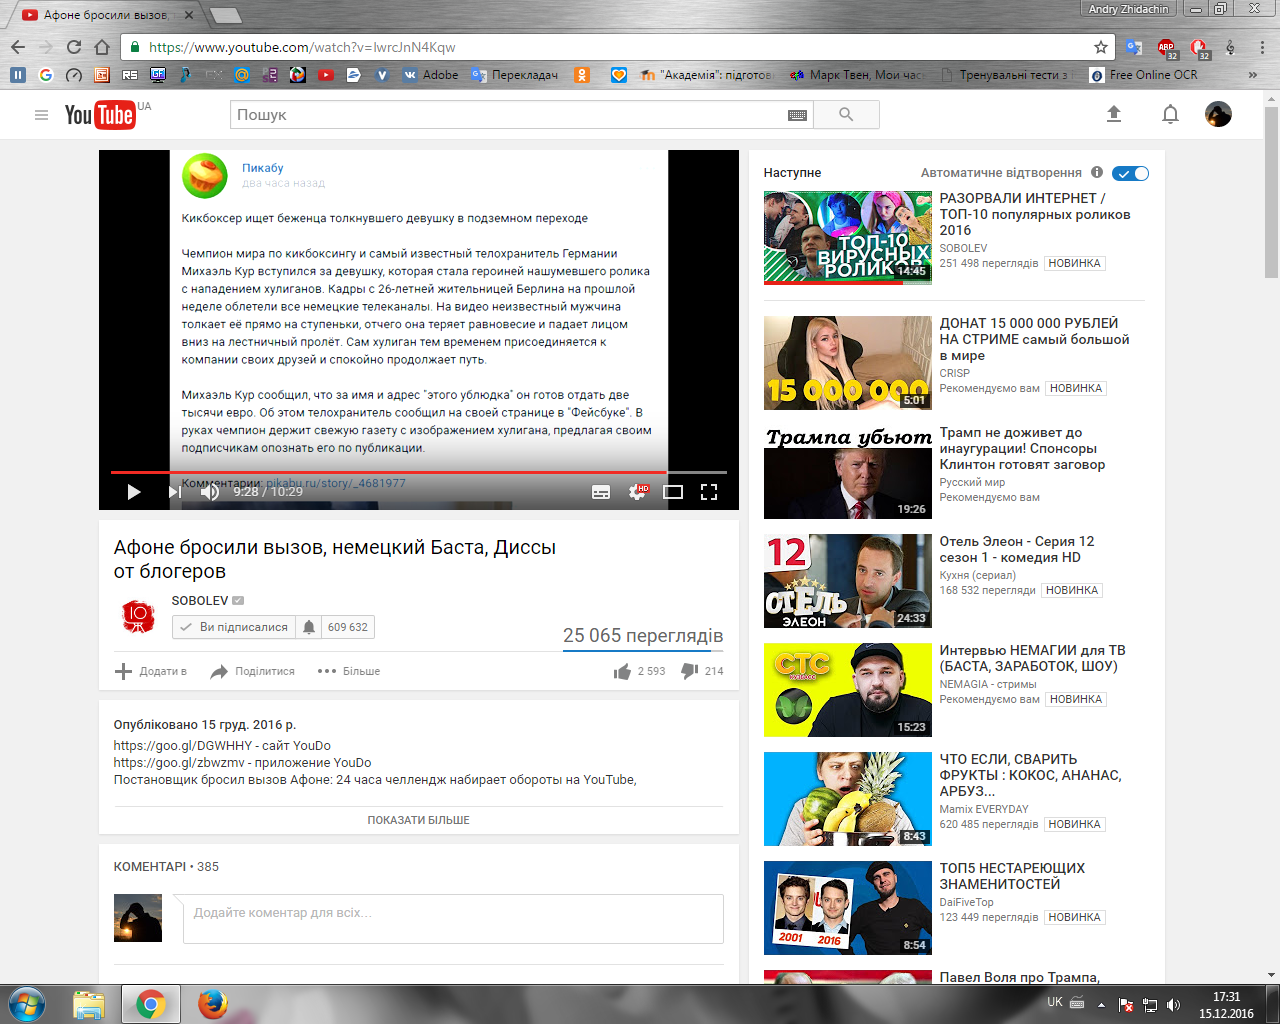 On one of the popular YouTube channels, a post with Peekaboo appeared - My, Youtube, Peekaboo, Peekaboo lit up